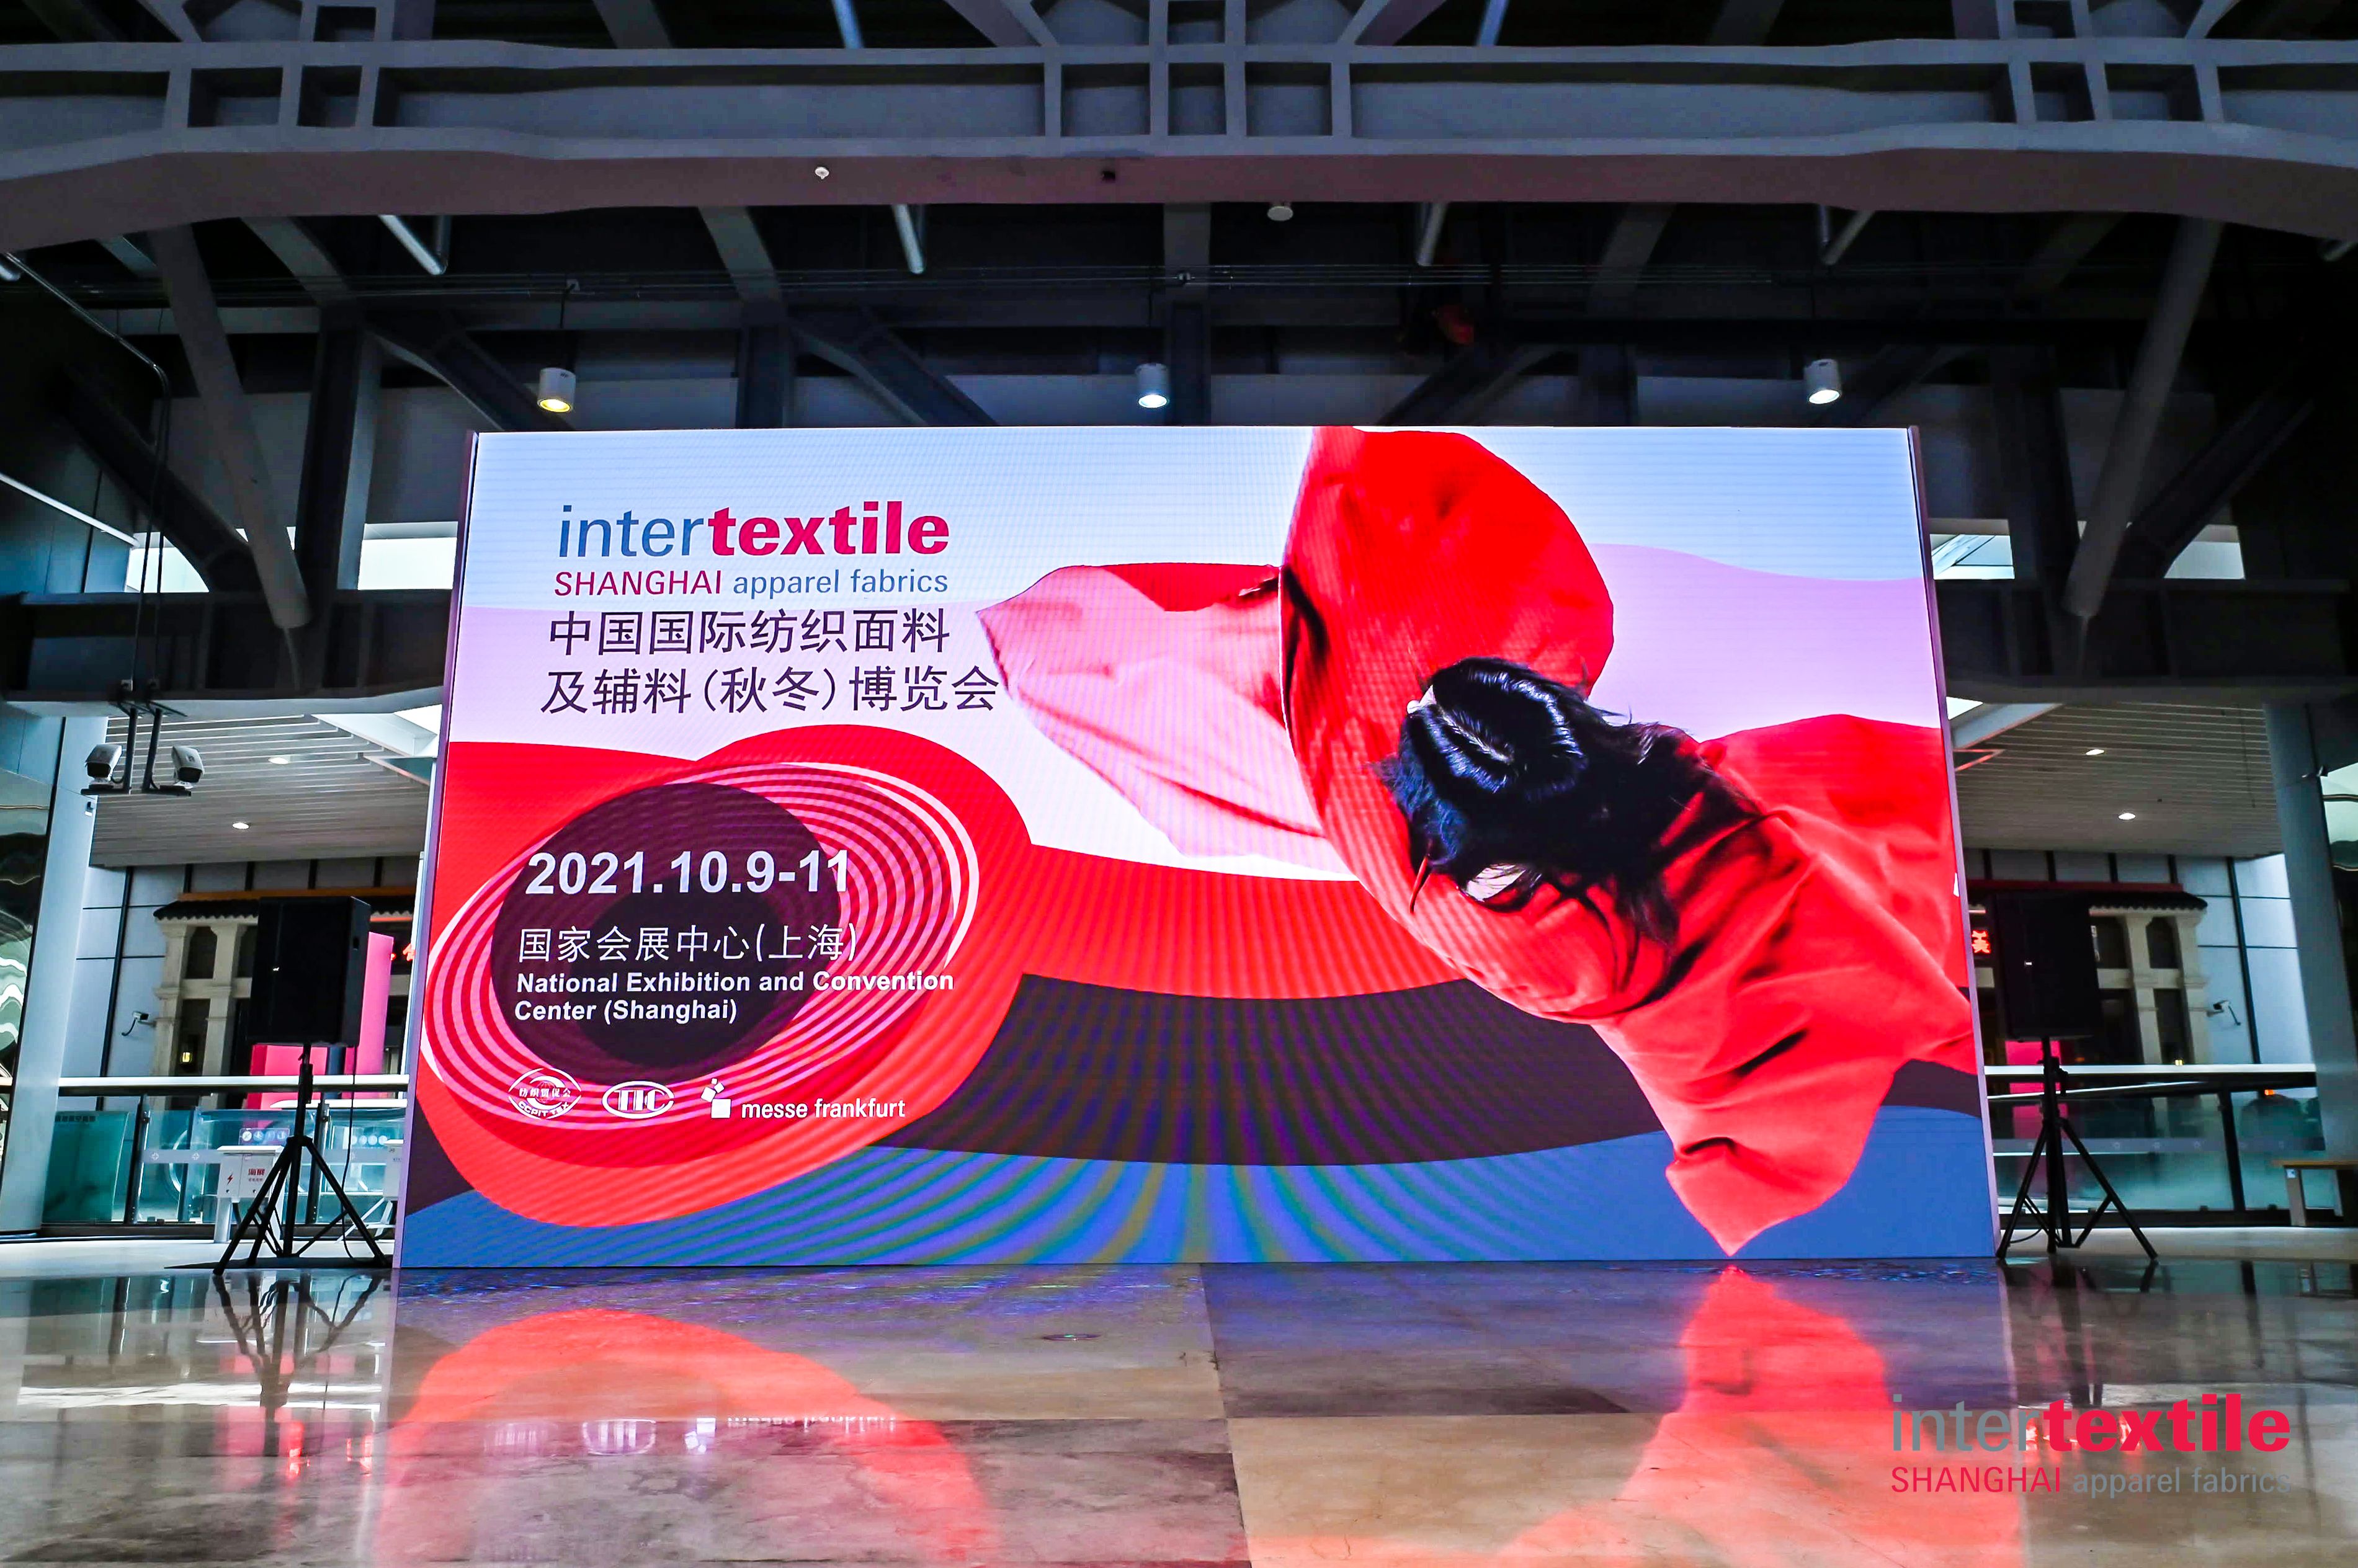 9.-11. Oktober 2021 Shanghai Intertextile Fair.